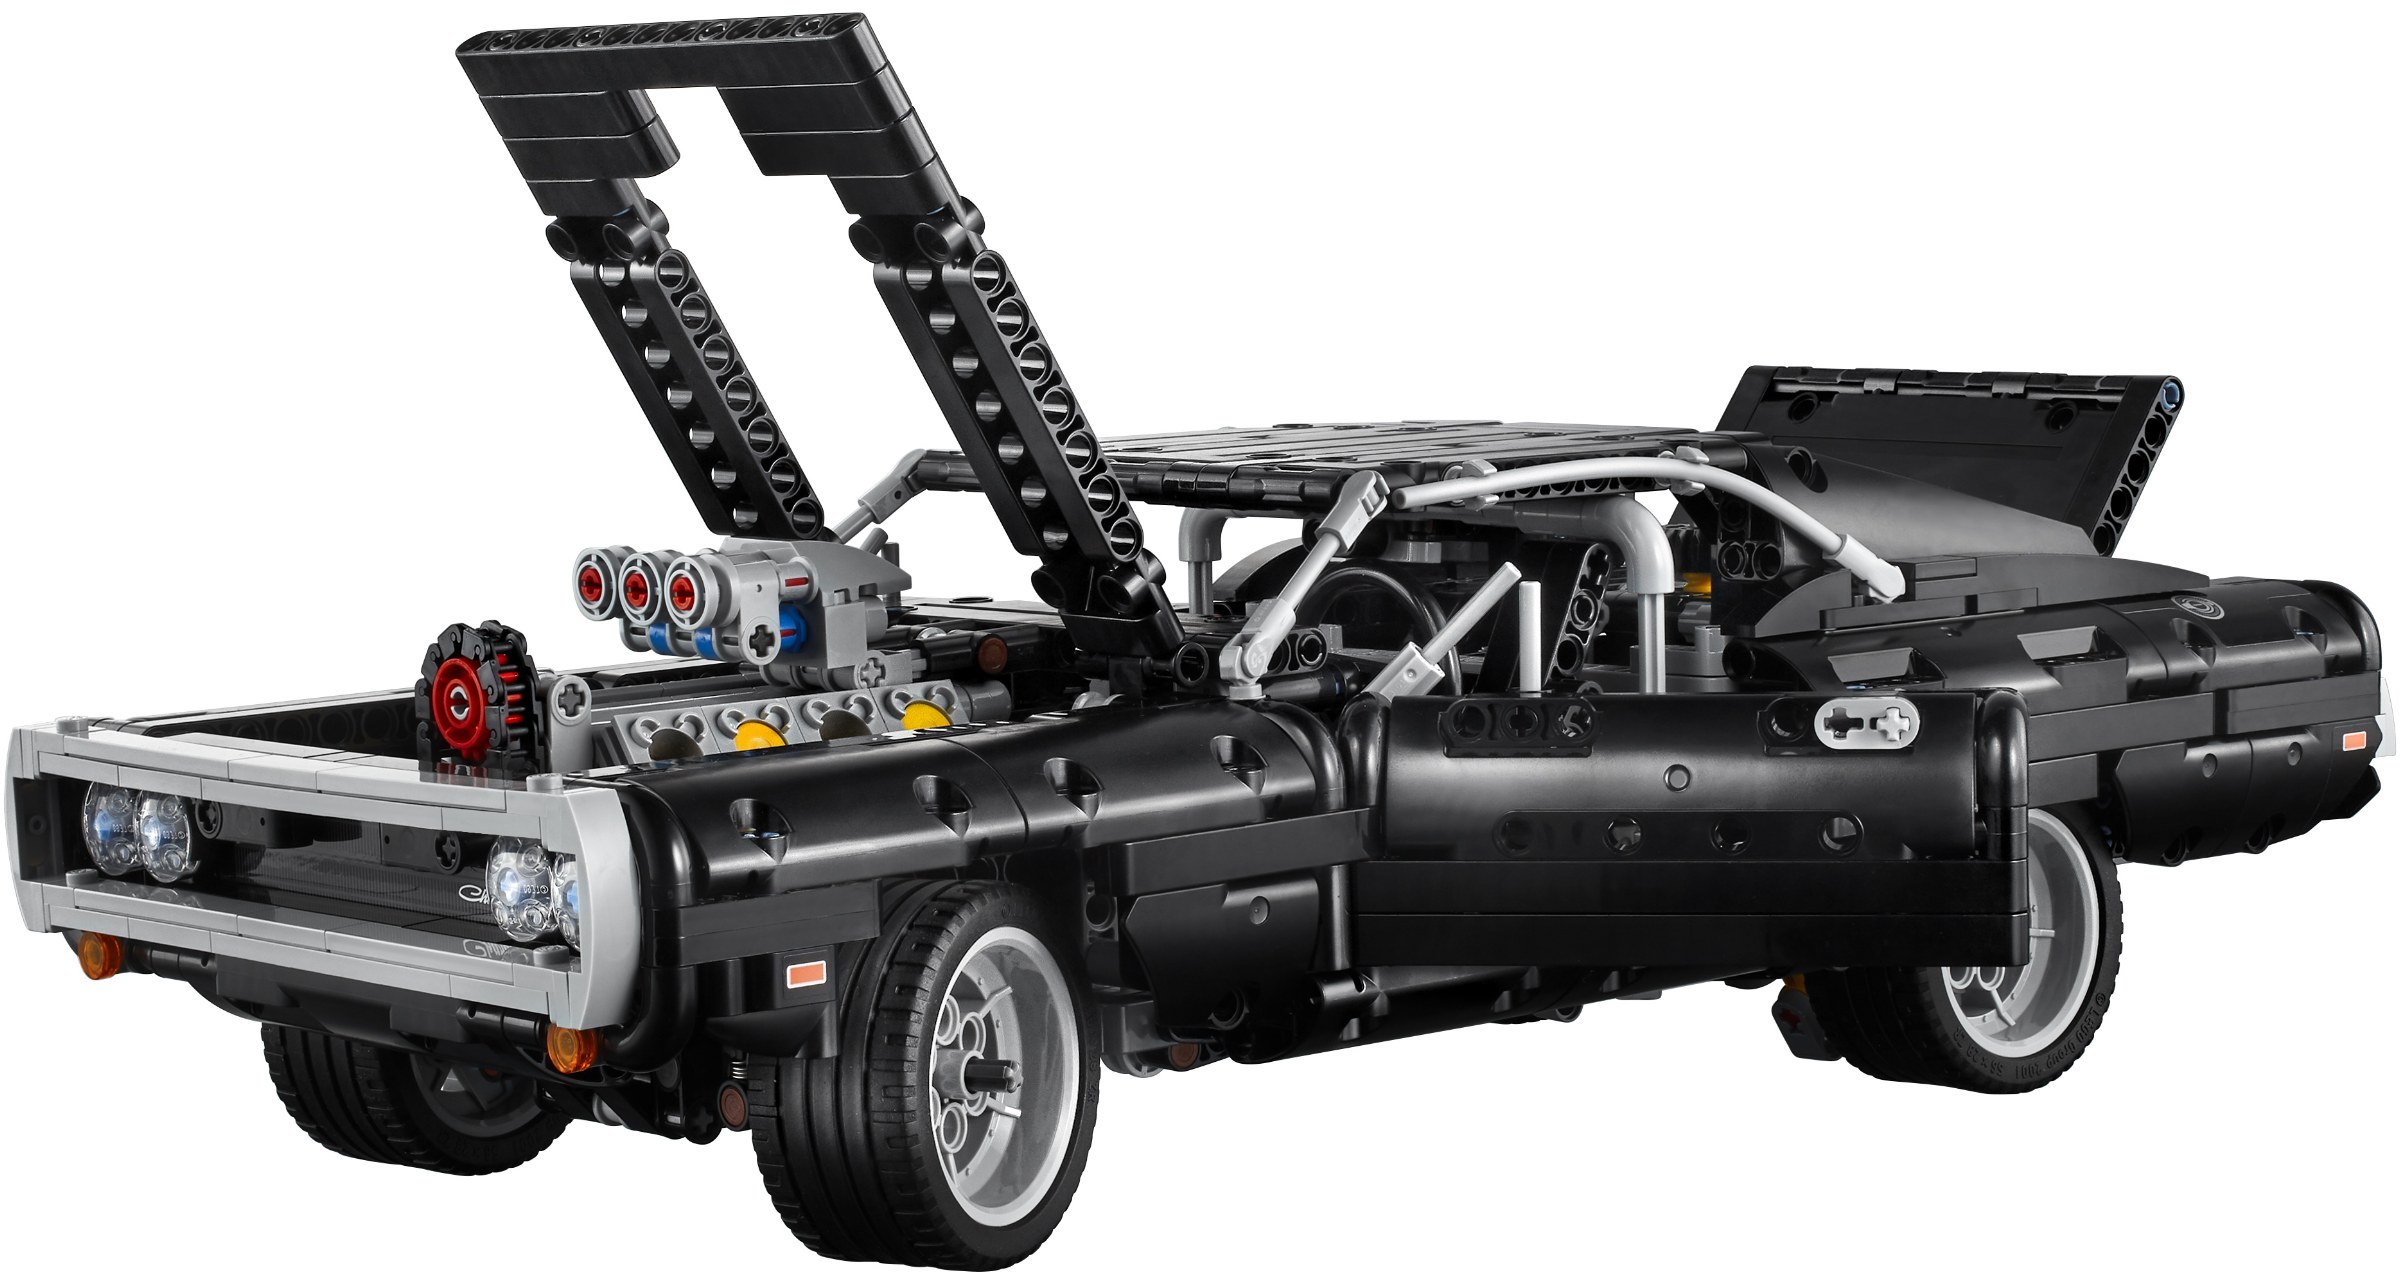 Brickfinder - LEGO Technic Fast & Furious Set Confirmed!